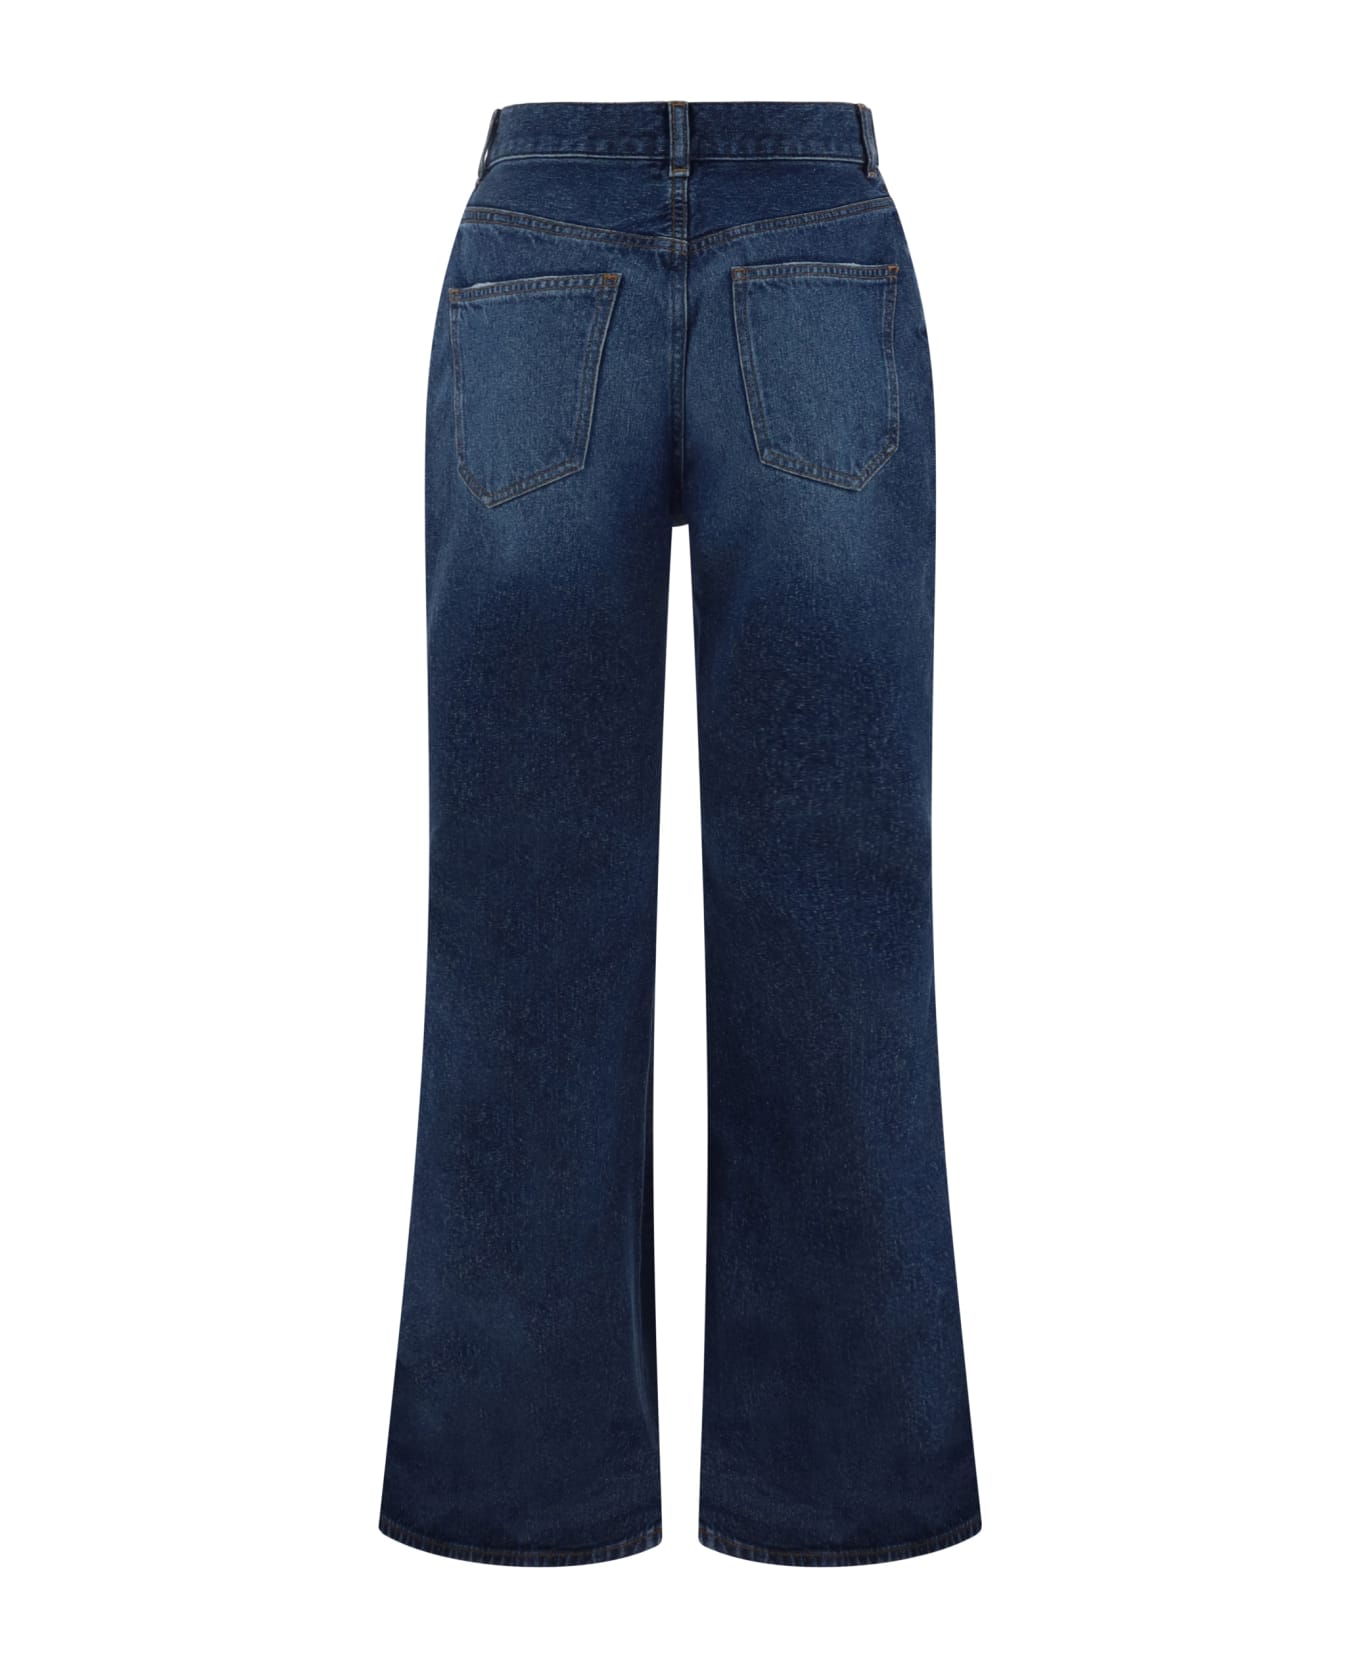 Chloé Chloè Merapi Cotton Denim Jeans - Faded Denim